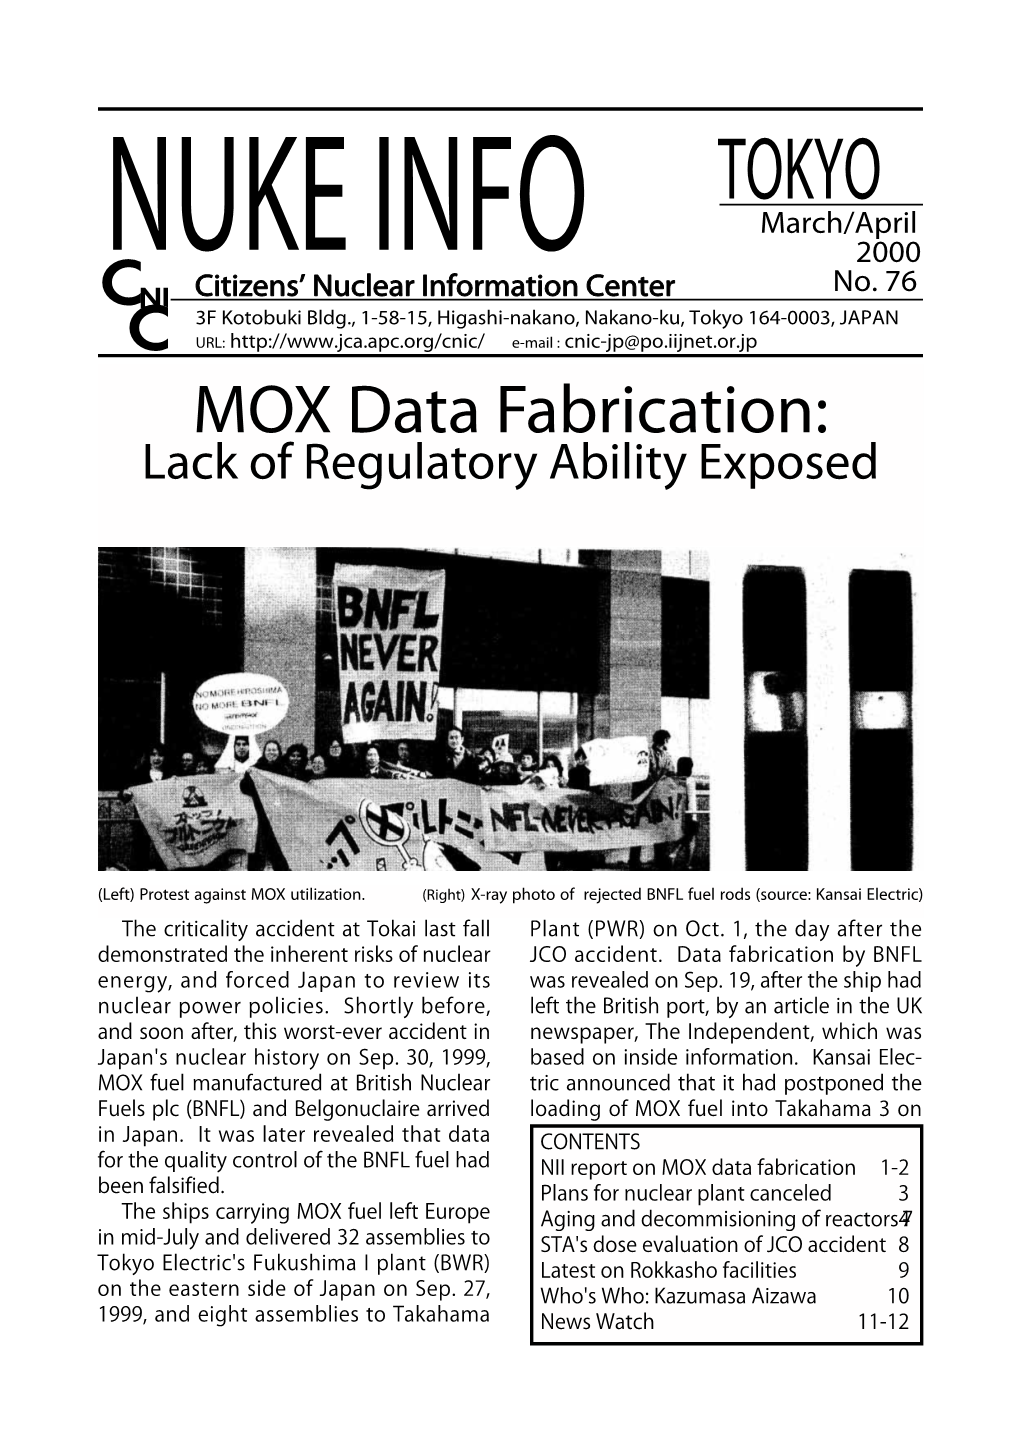 MOX Data Fabrication: Lack of Regulatory Ability Exposed